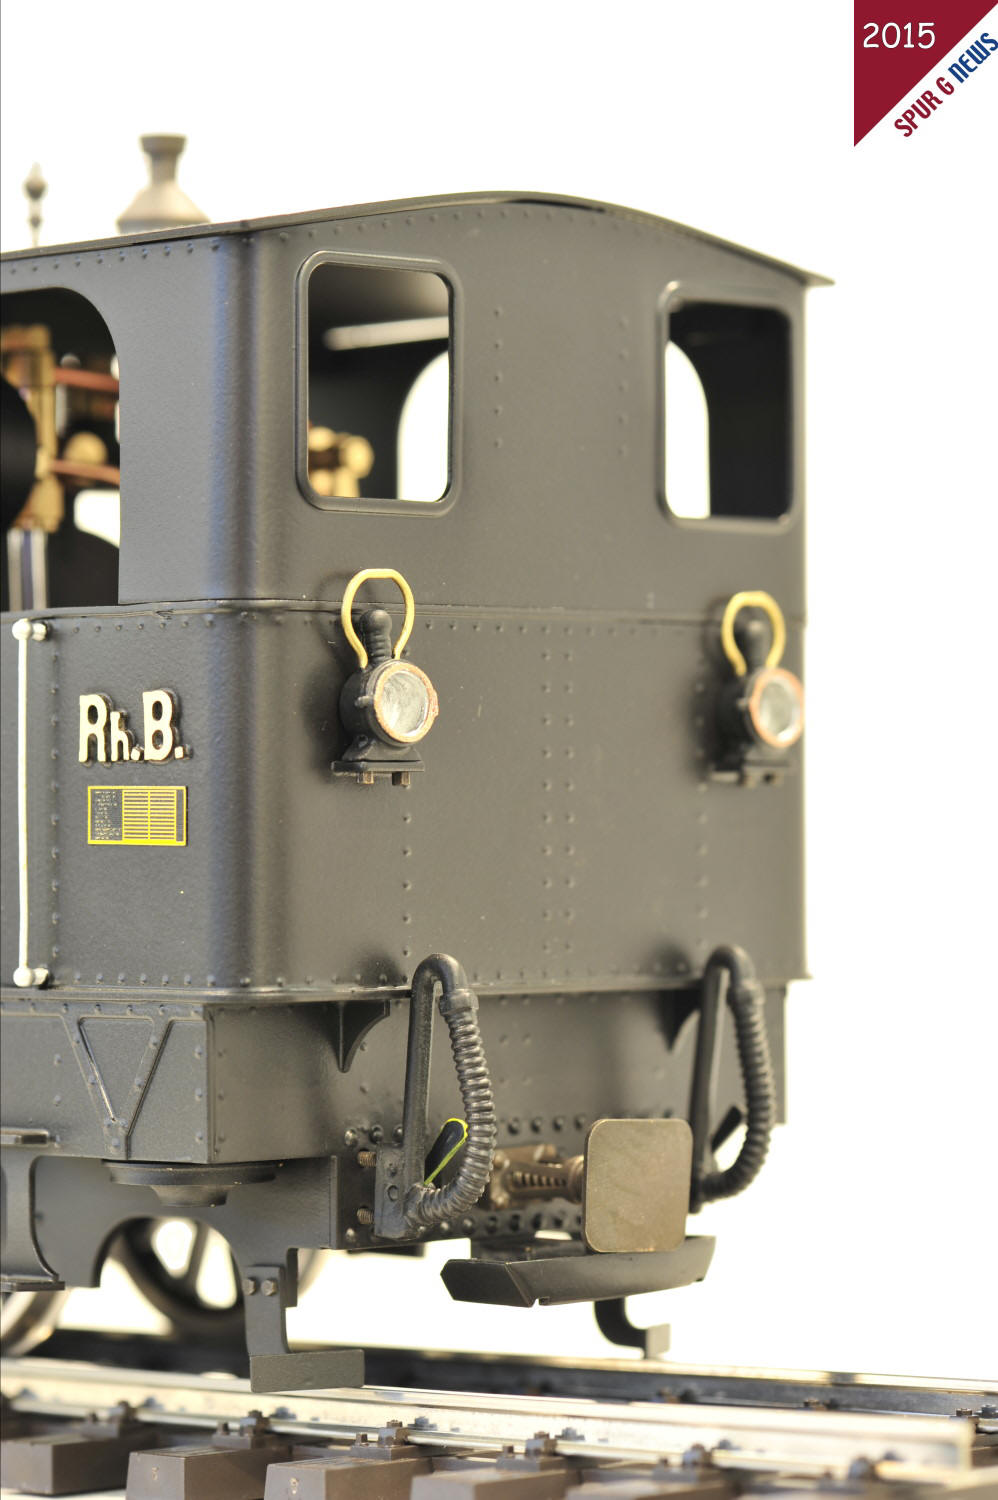 RhB G 2/3+2/2 Nr.25 Mallet Tenderdampflokomotive